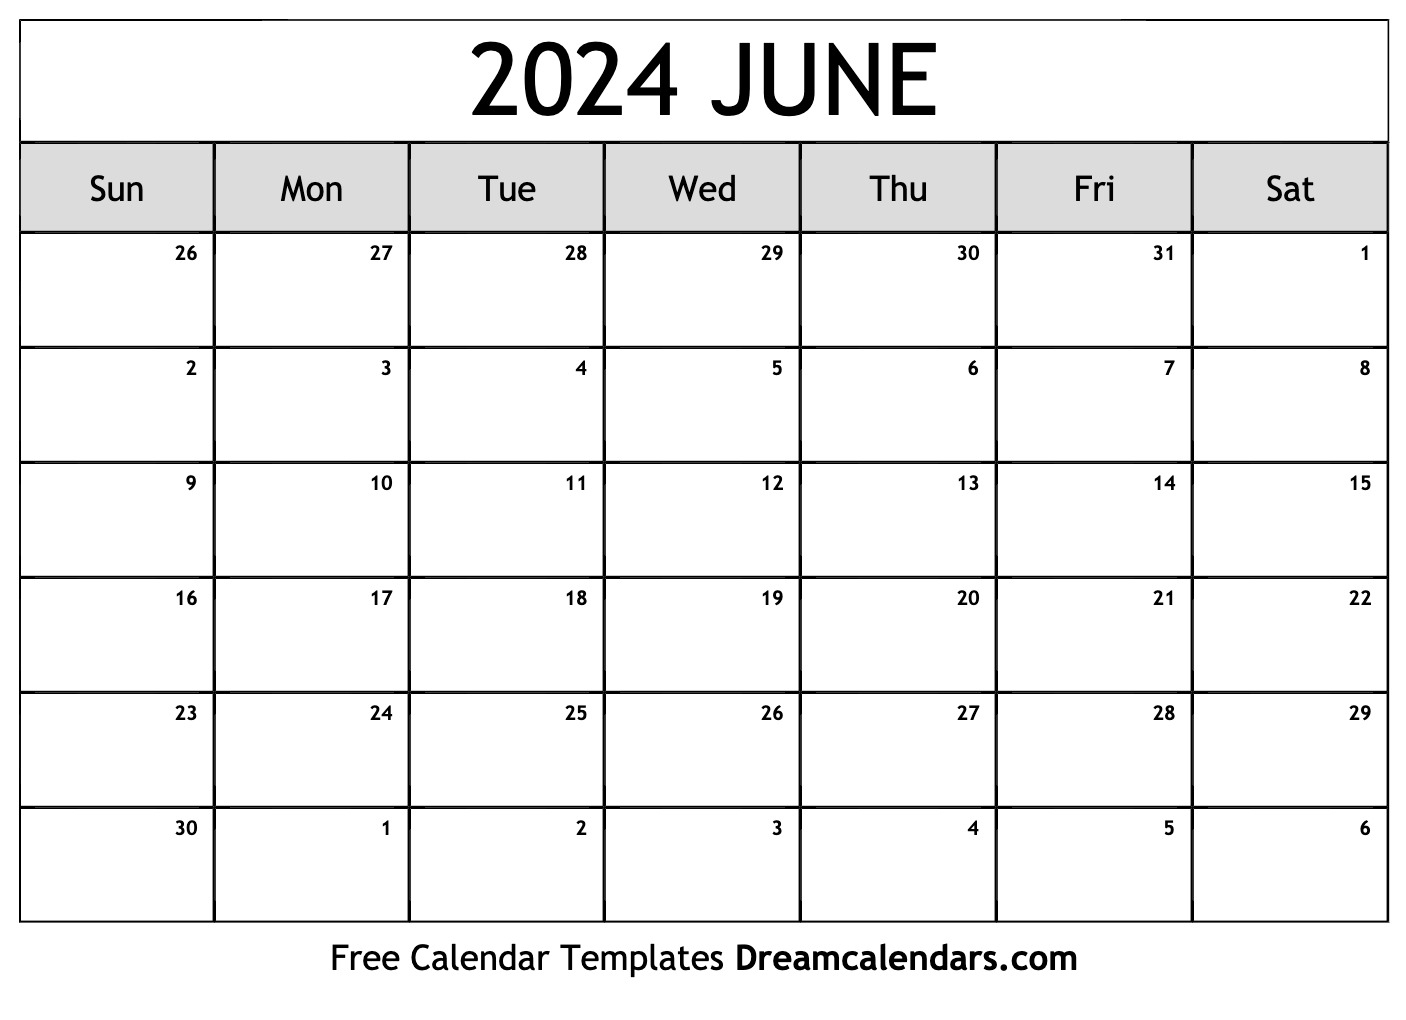 June 2024 Calendar | Free Blank Printable With Holidays for 2024 June Calendar Free Printable